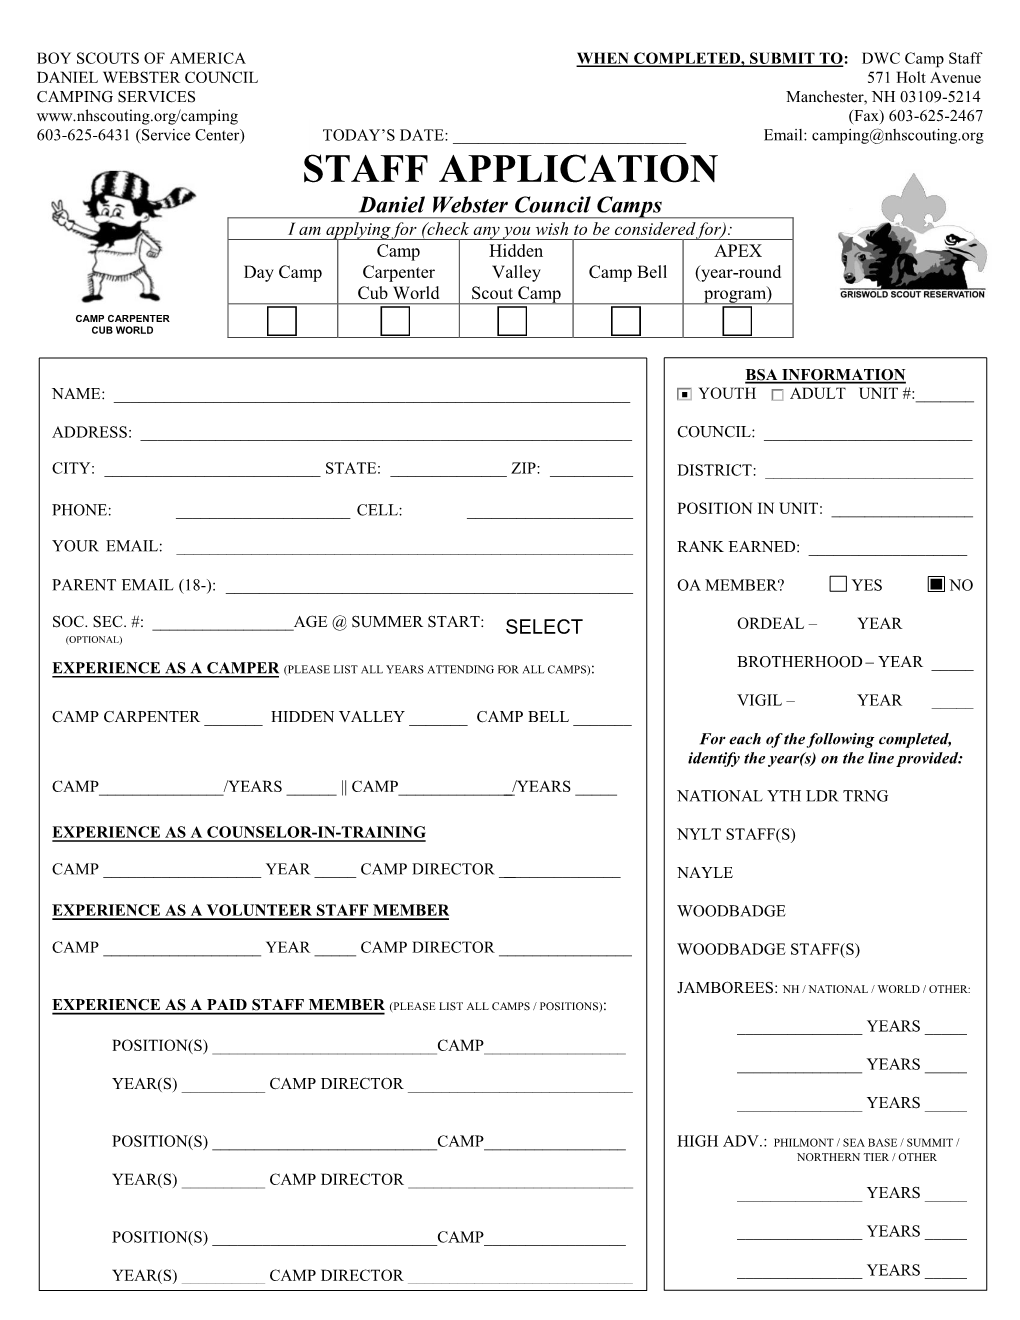 Camp Staff Application